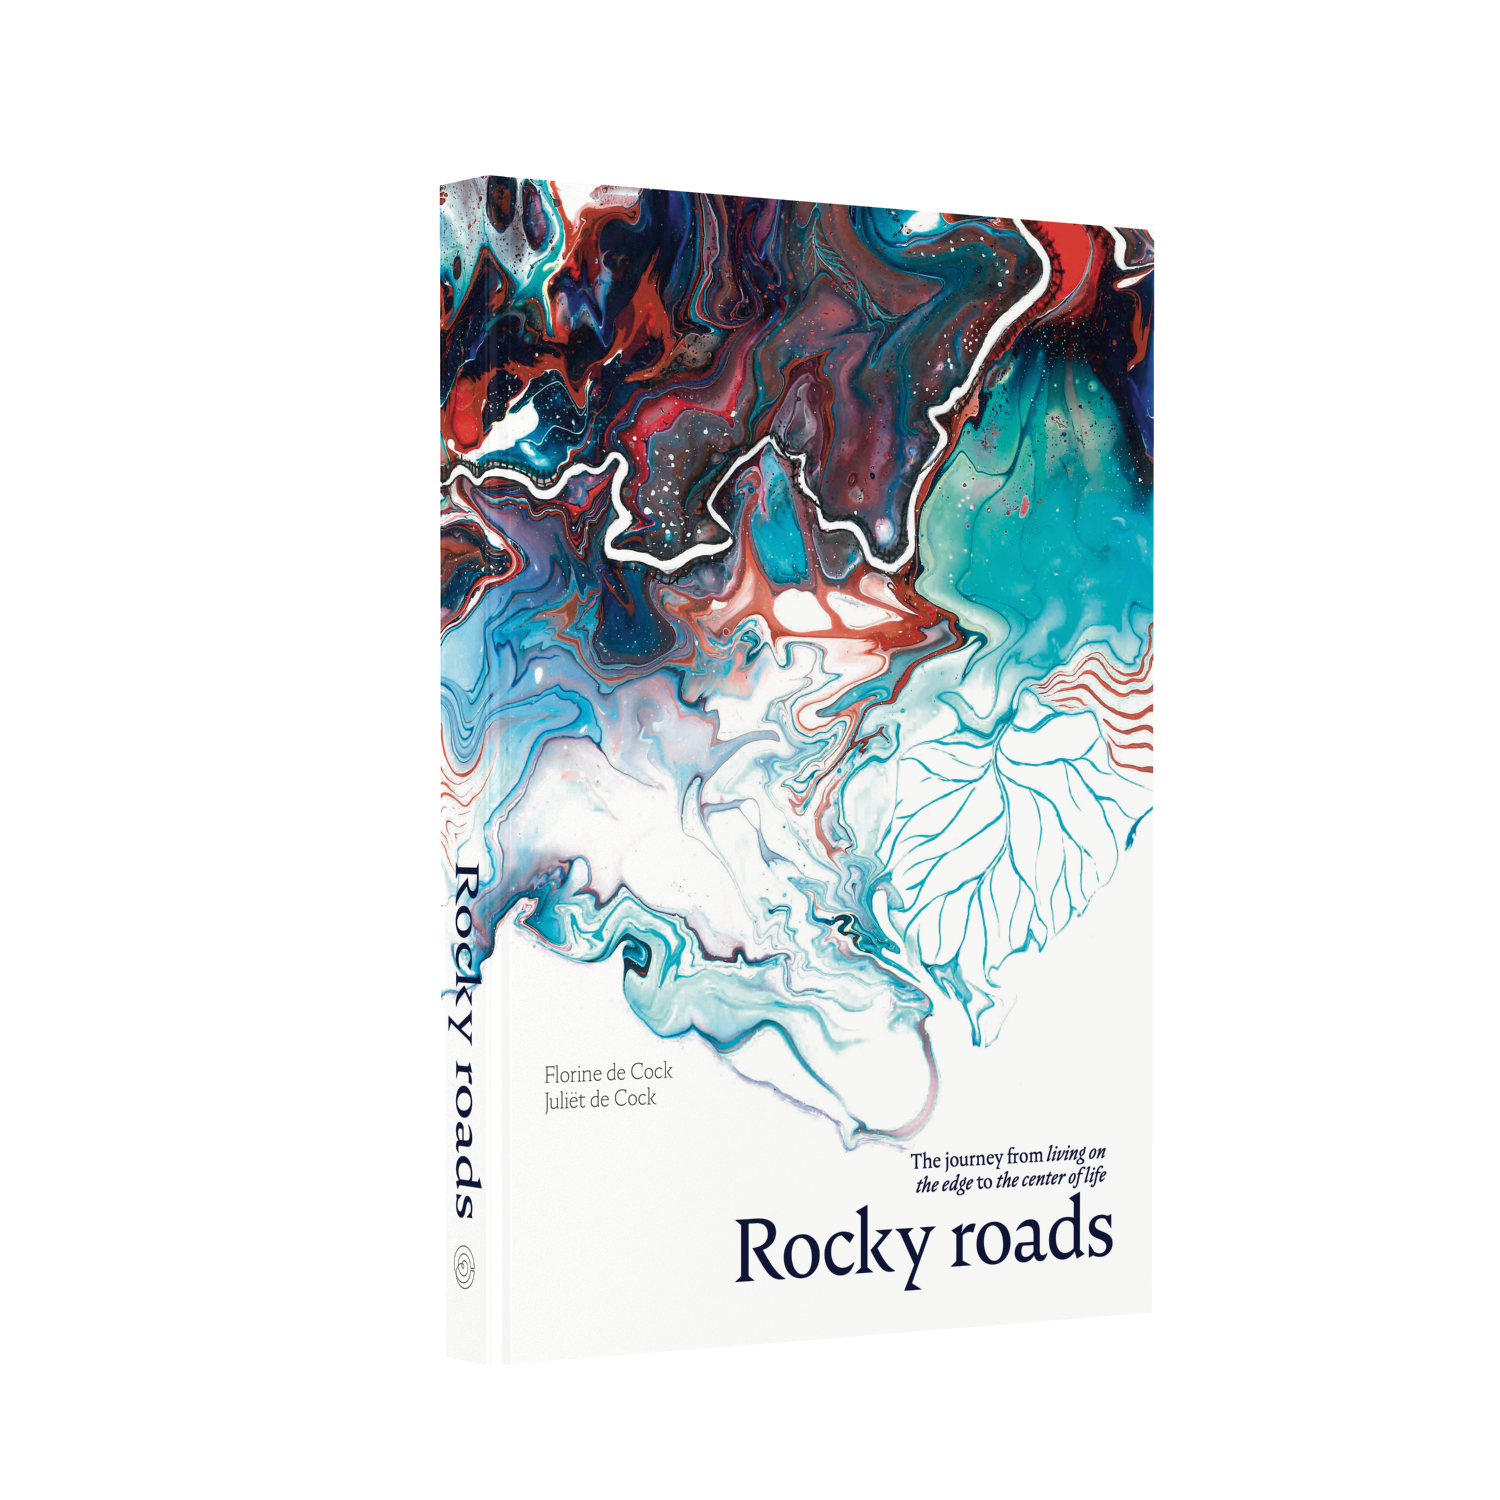 Rocky roads